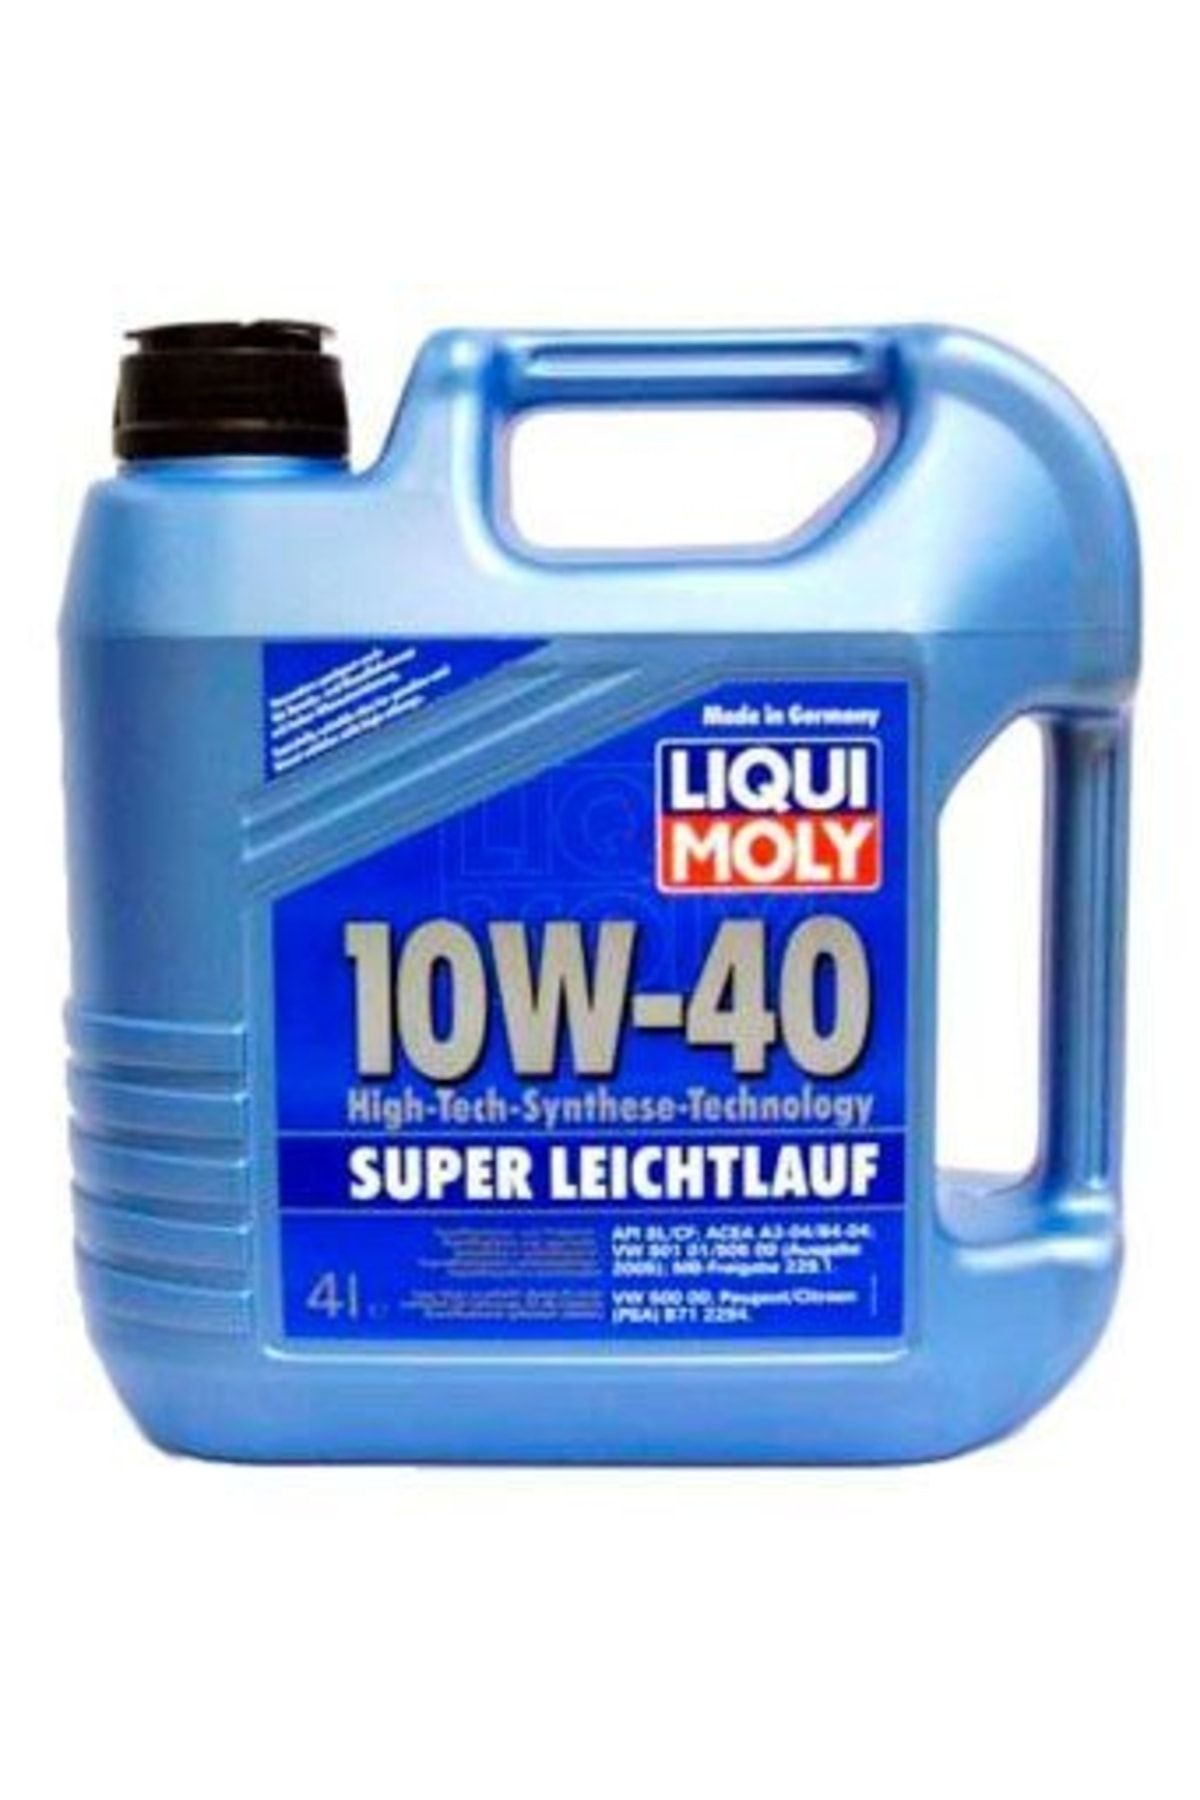 Масло ликви моли полусинтетика. Ликви моли 10w 40 super Leichtlauf. Моторное масло Liqui Moly super Leichtlauf 10w-40 4 л. Liqui Moly super Leichtlauf 10w-40 5 л артикул. Ликви моли супер лайчлауф 10w 40.